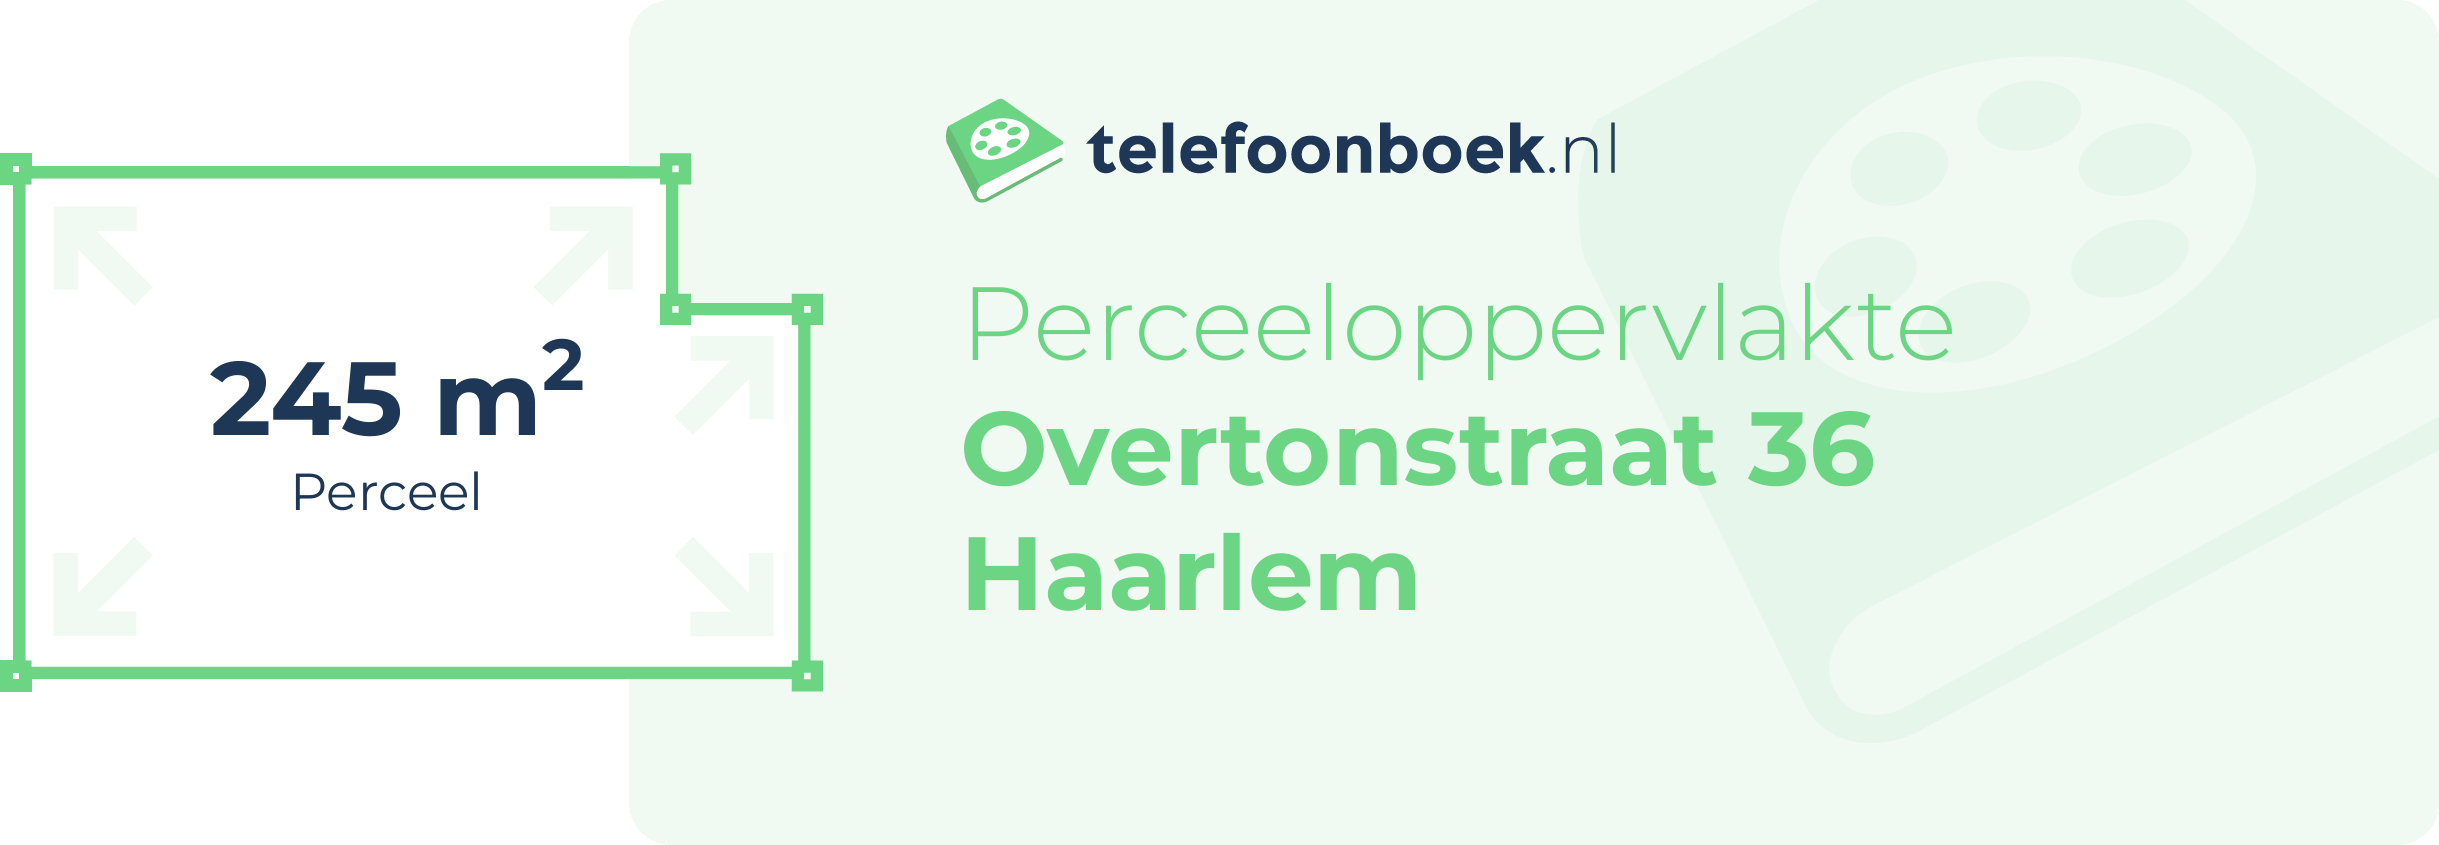 Perceeloppervlakte Overtonstraat 36 Haarlem